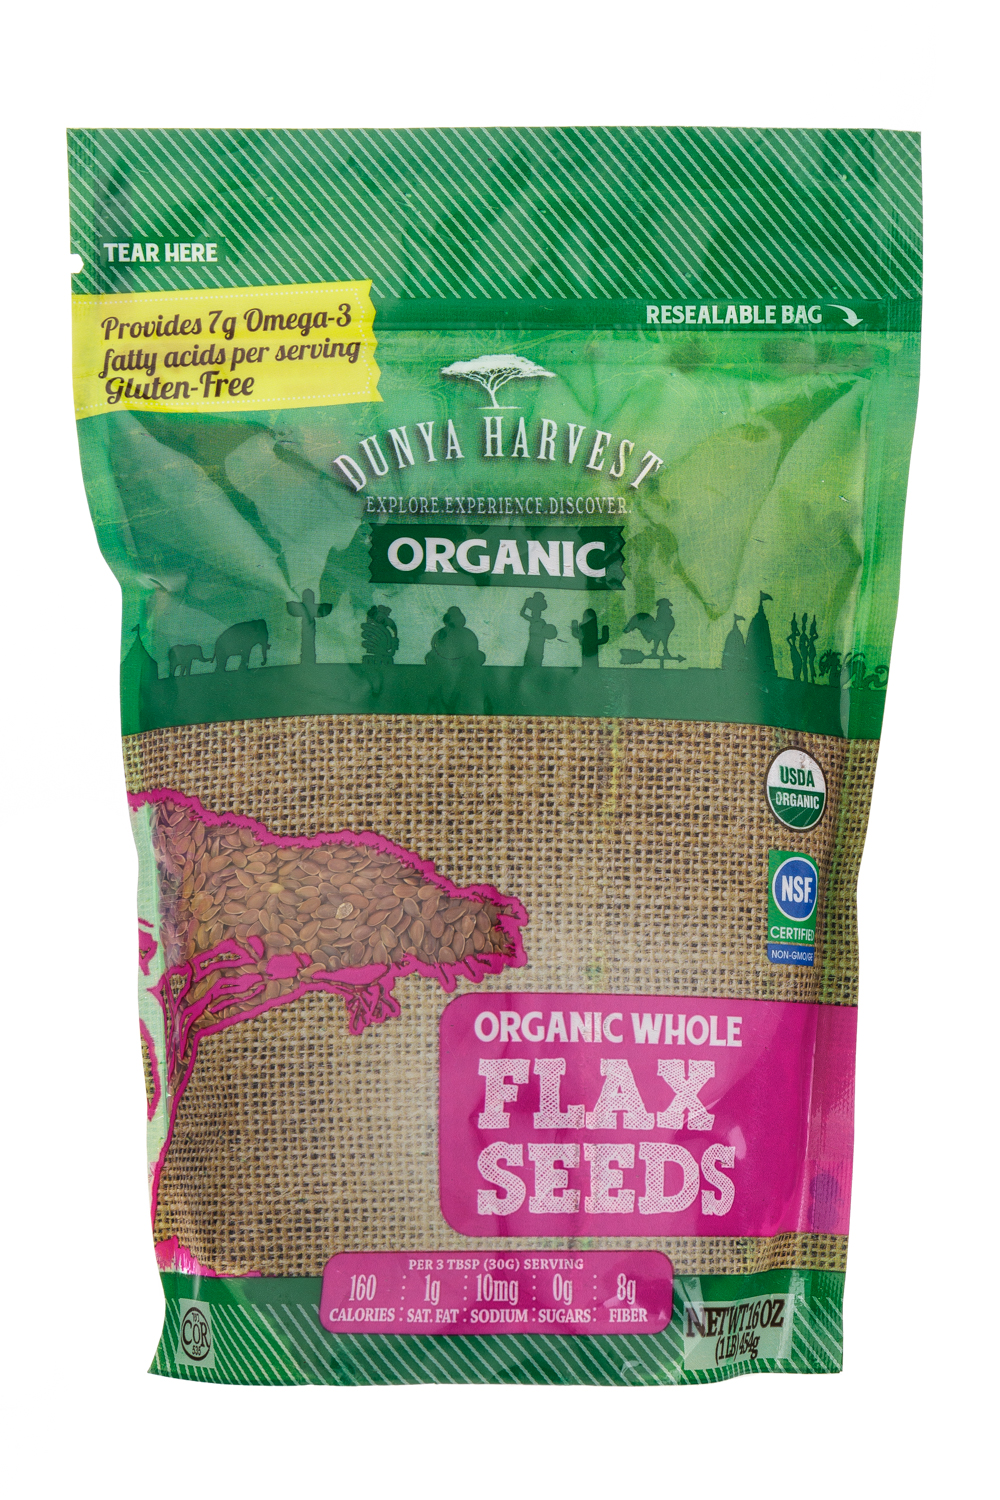 Organic whole flax seeds